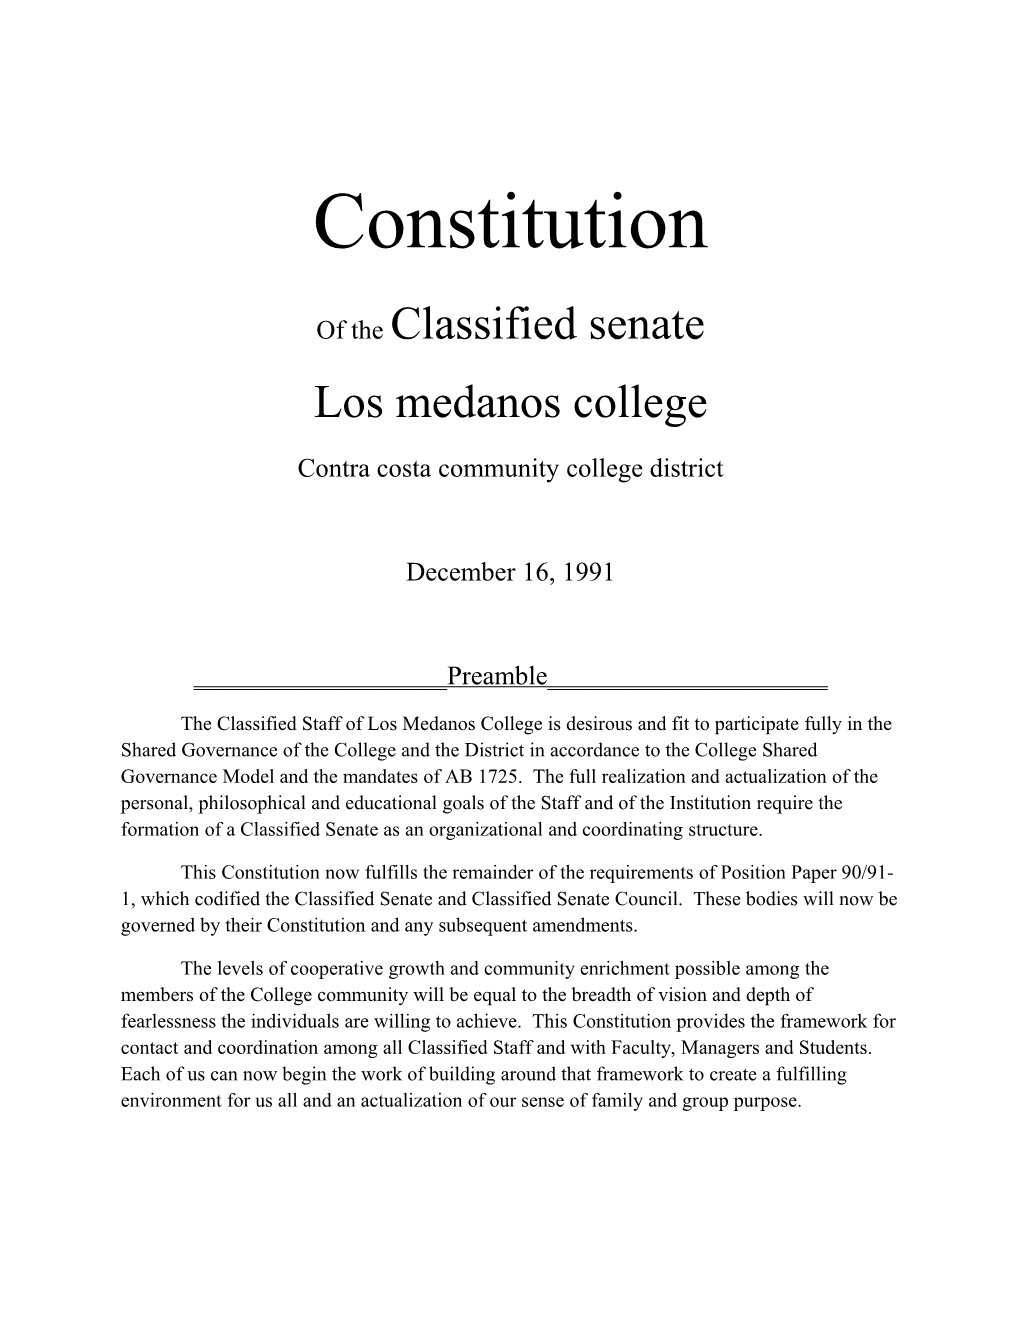 Of the Classified Senate